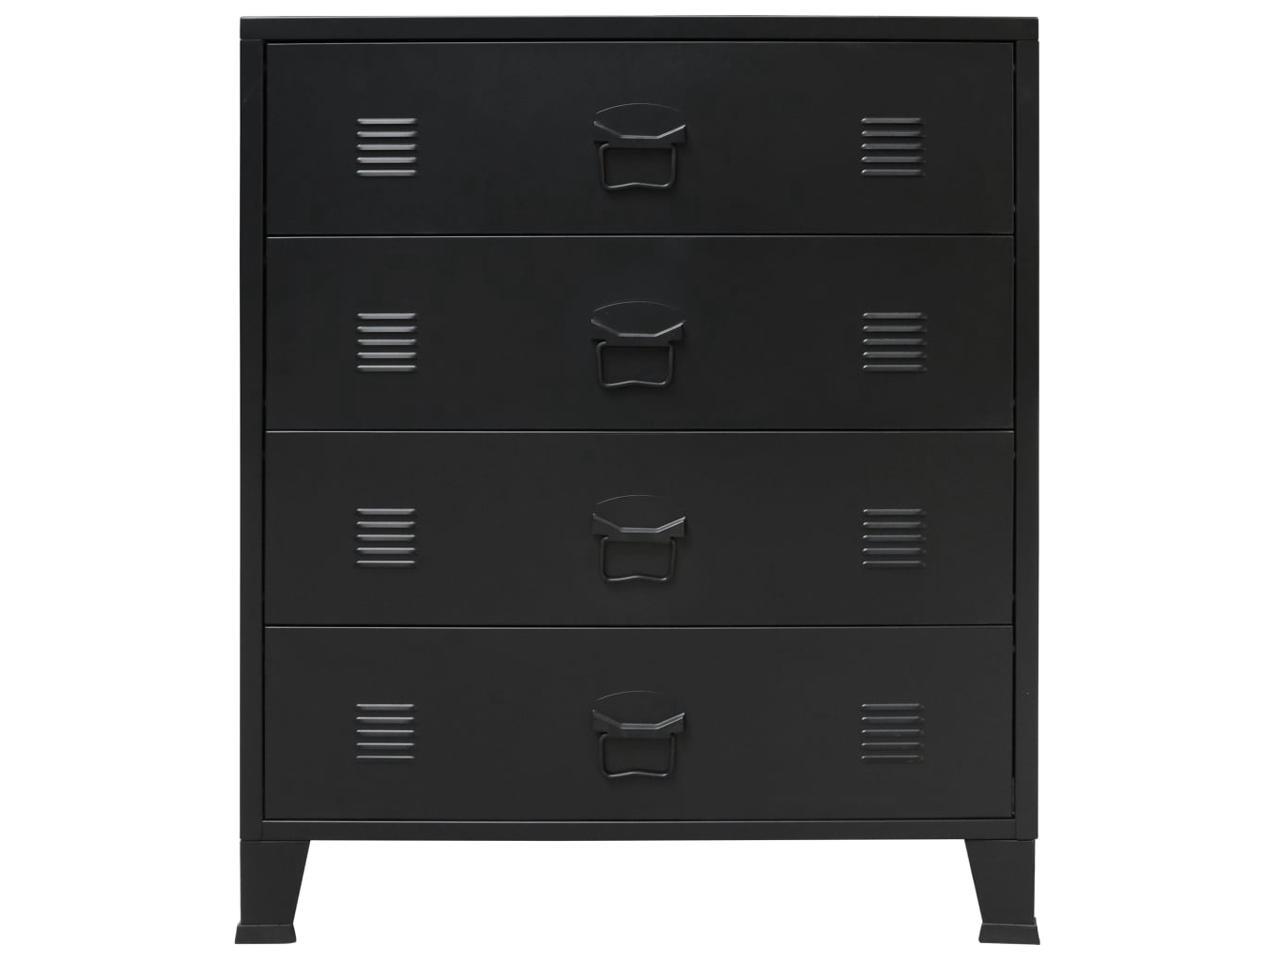 vidaXL Storage Cabinet Shelve with 6 Fabric Drawers Home Living room Storage Organiser Unit Drawer Chest Multipurpose Shelf Grey Steel